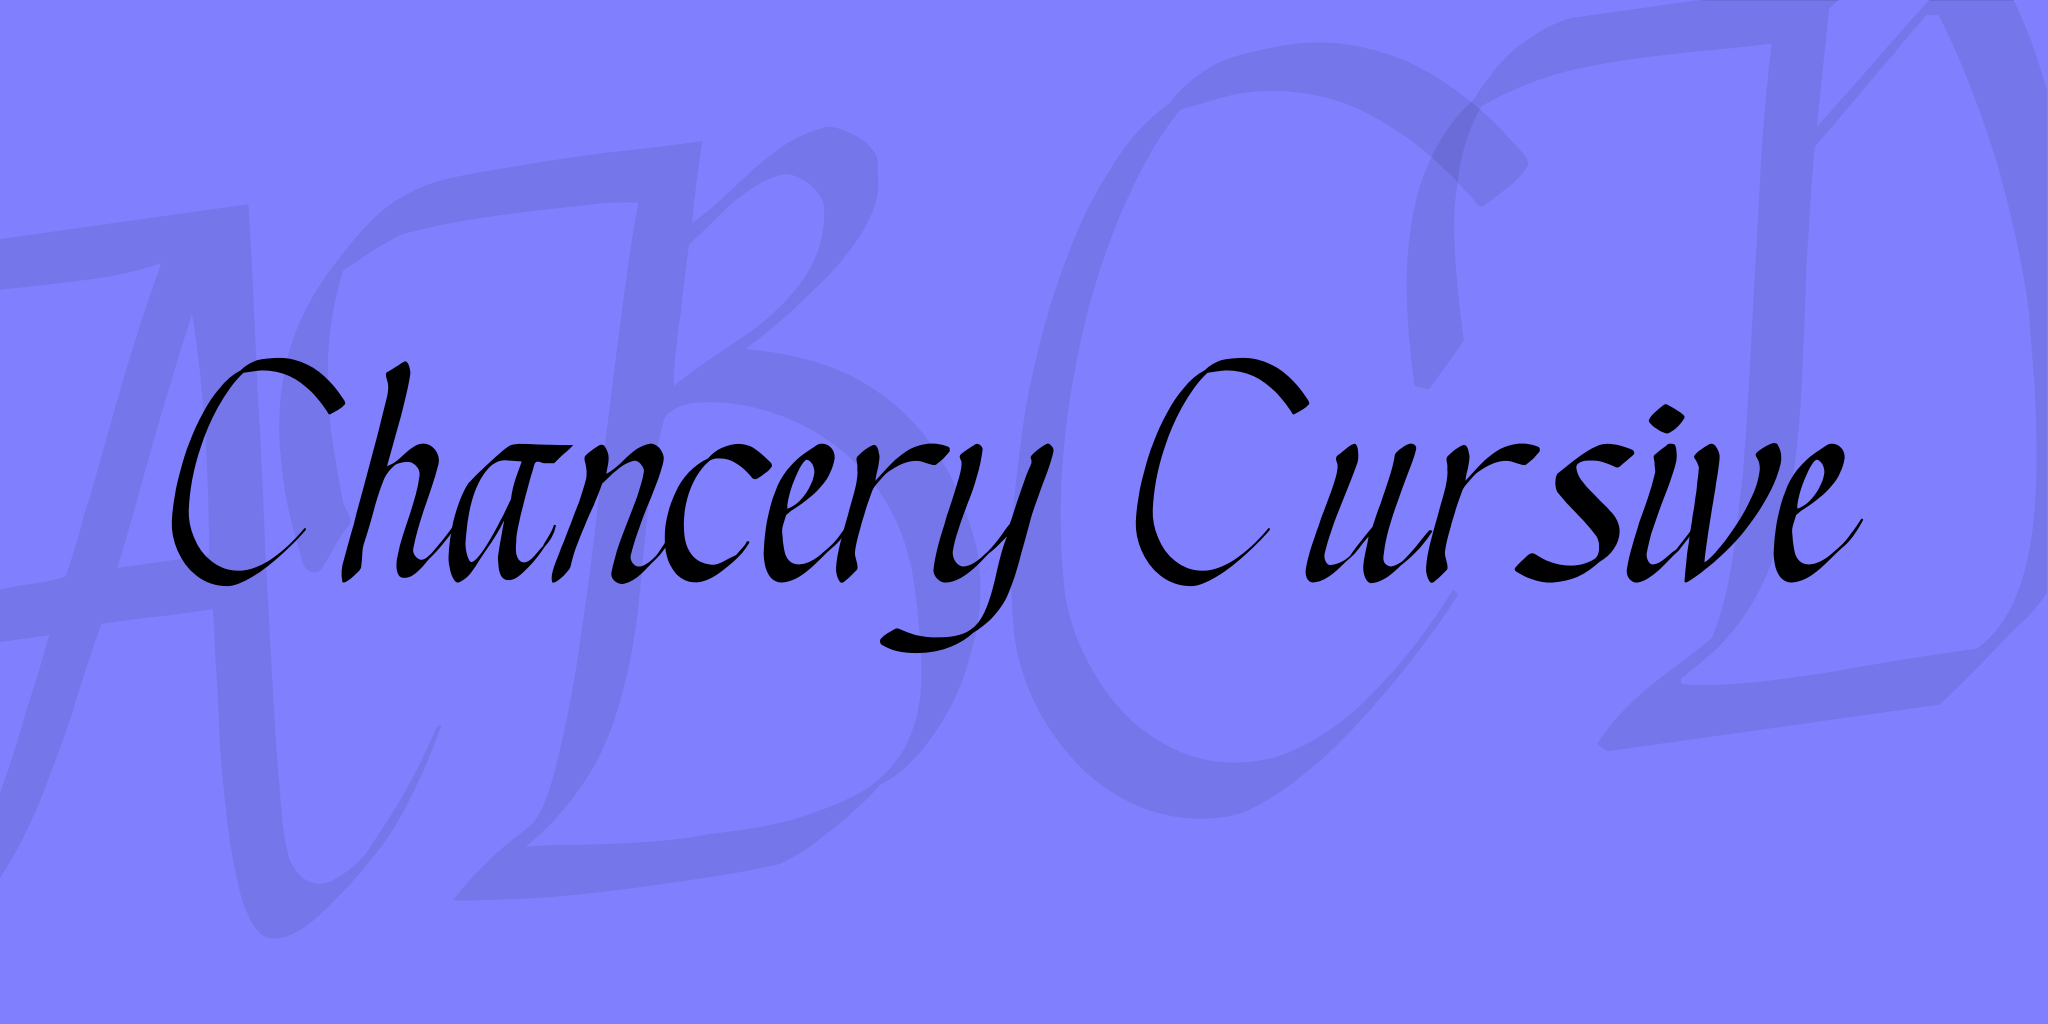 Chancery Cursive